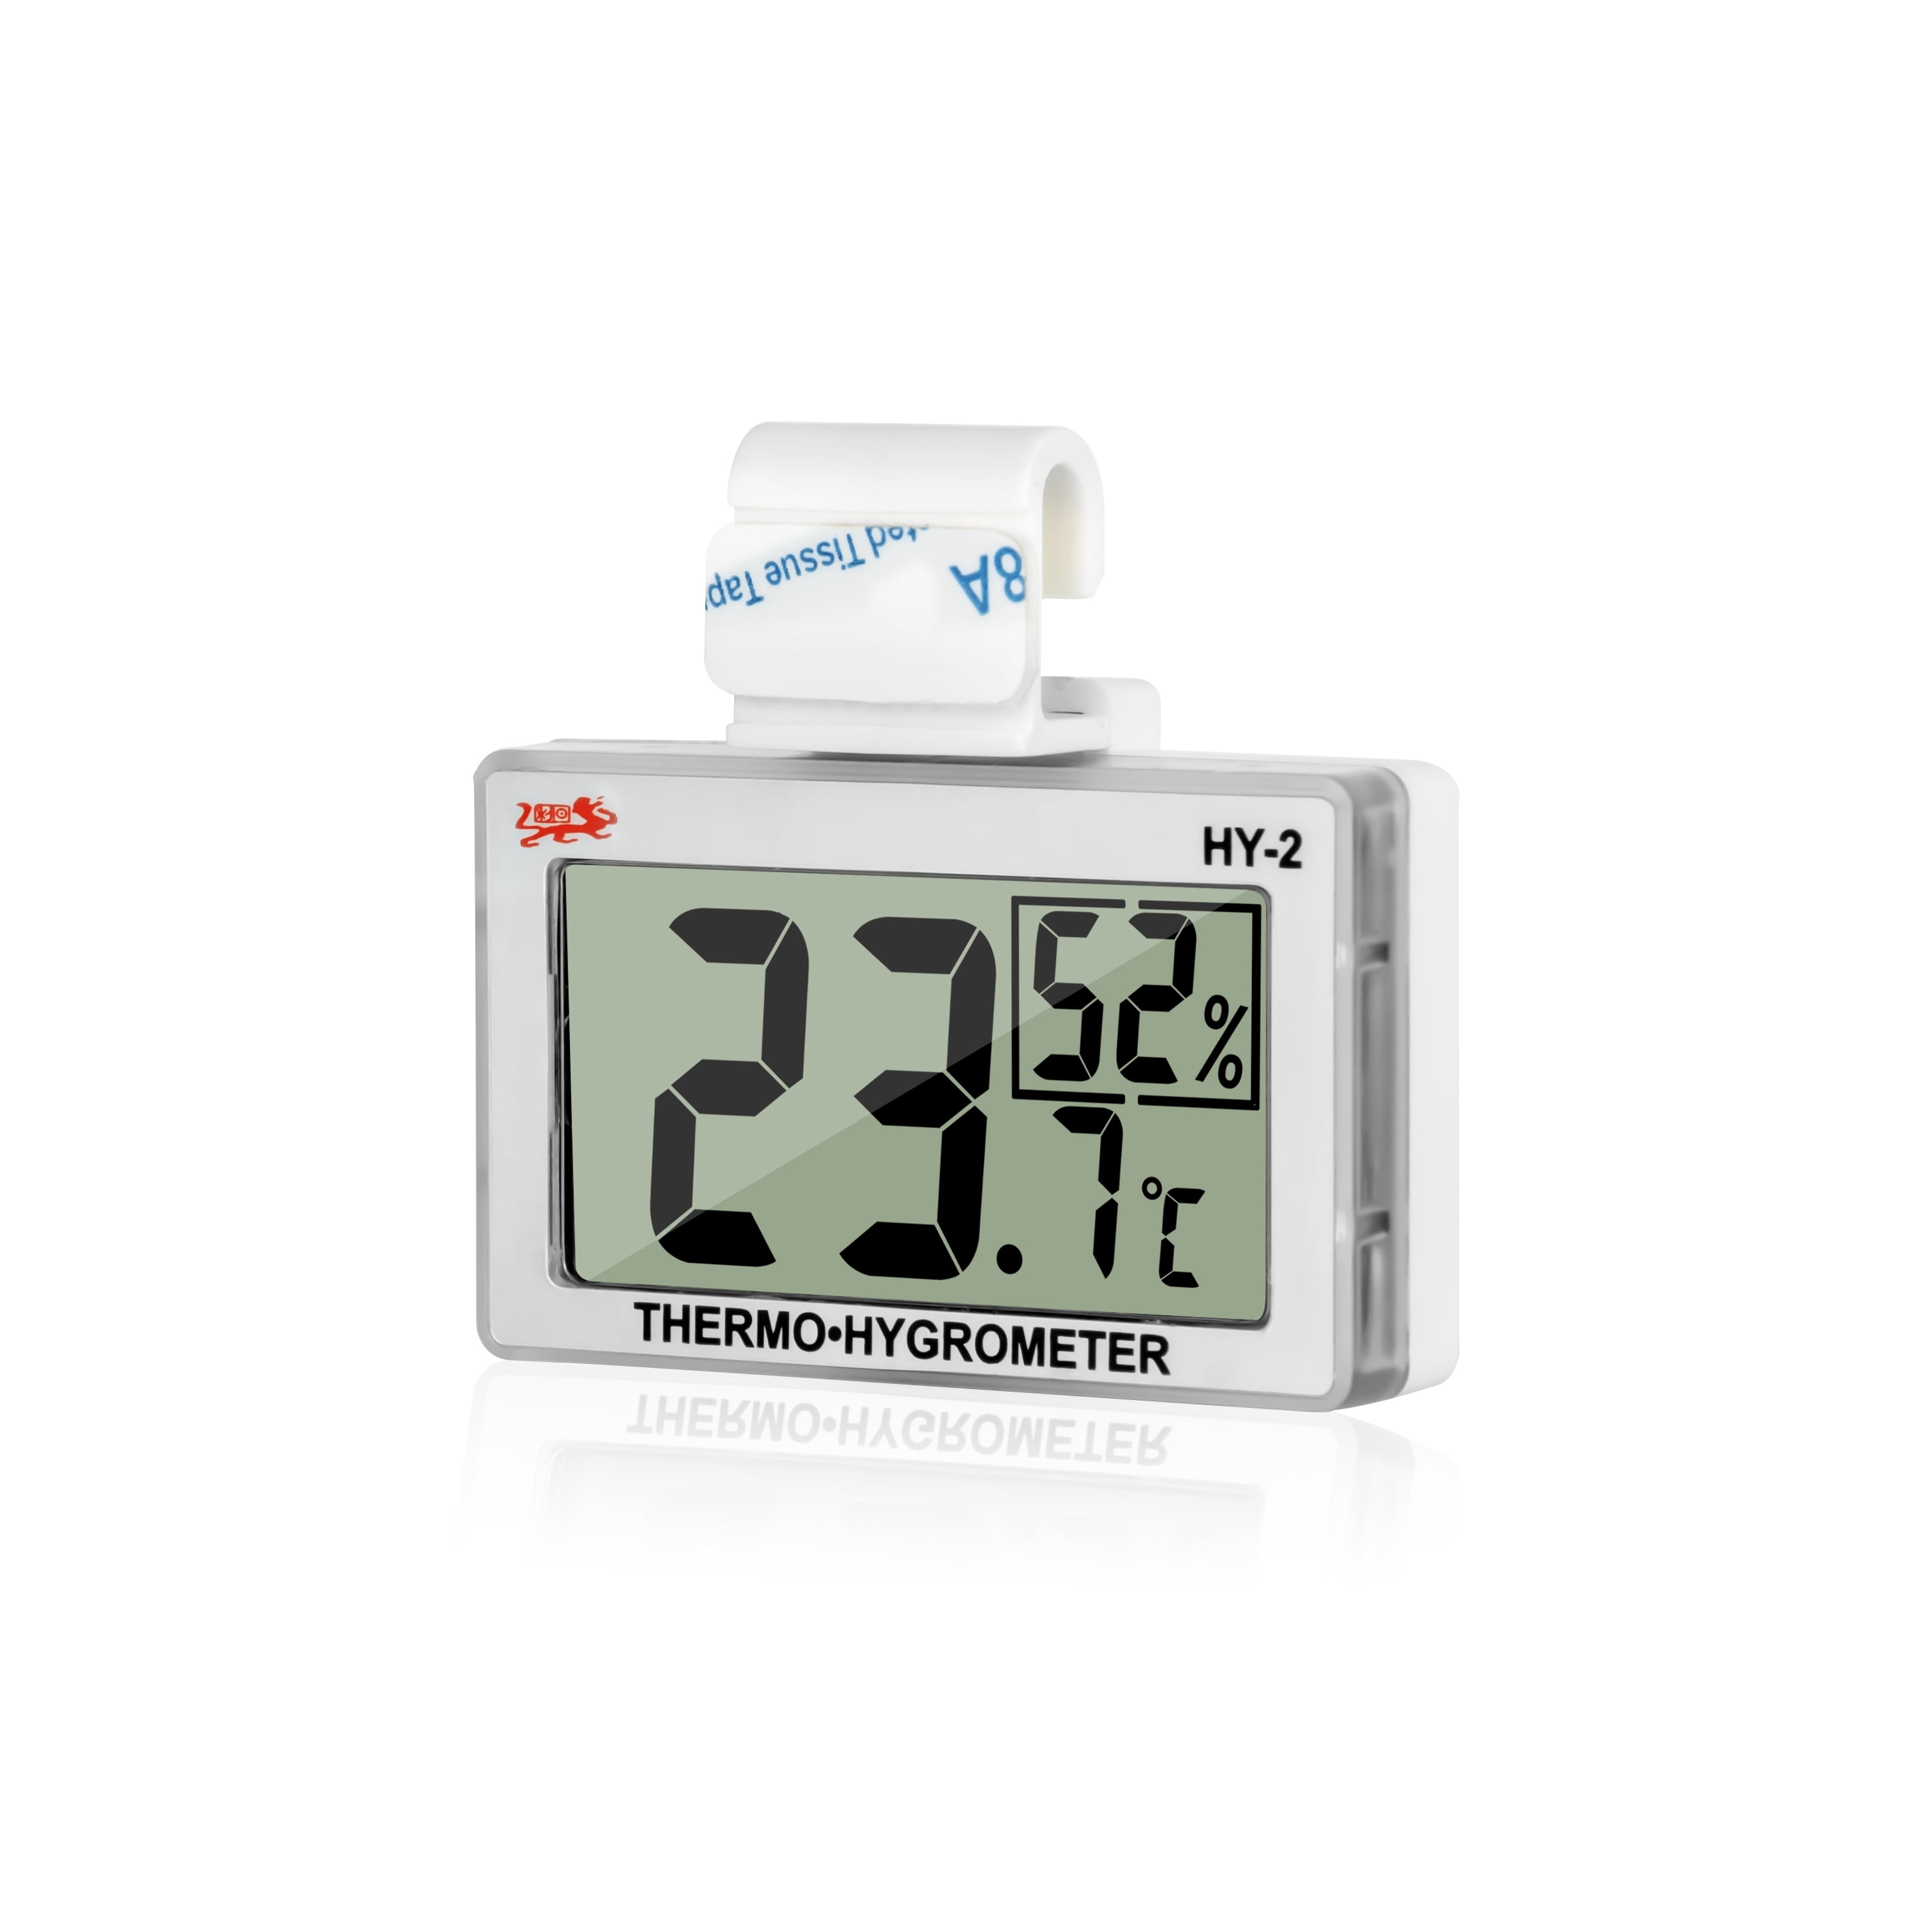 LXSZRPH Reptile Thermometer Hygrometer HD LCD Reptile Tank Digital  Thermometer with Hook Temperature Humidity Meter Gauge for Reptile Tanks,  Terrariums, Vivarium (1pack) 